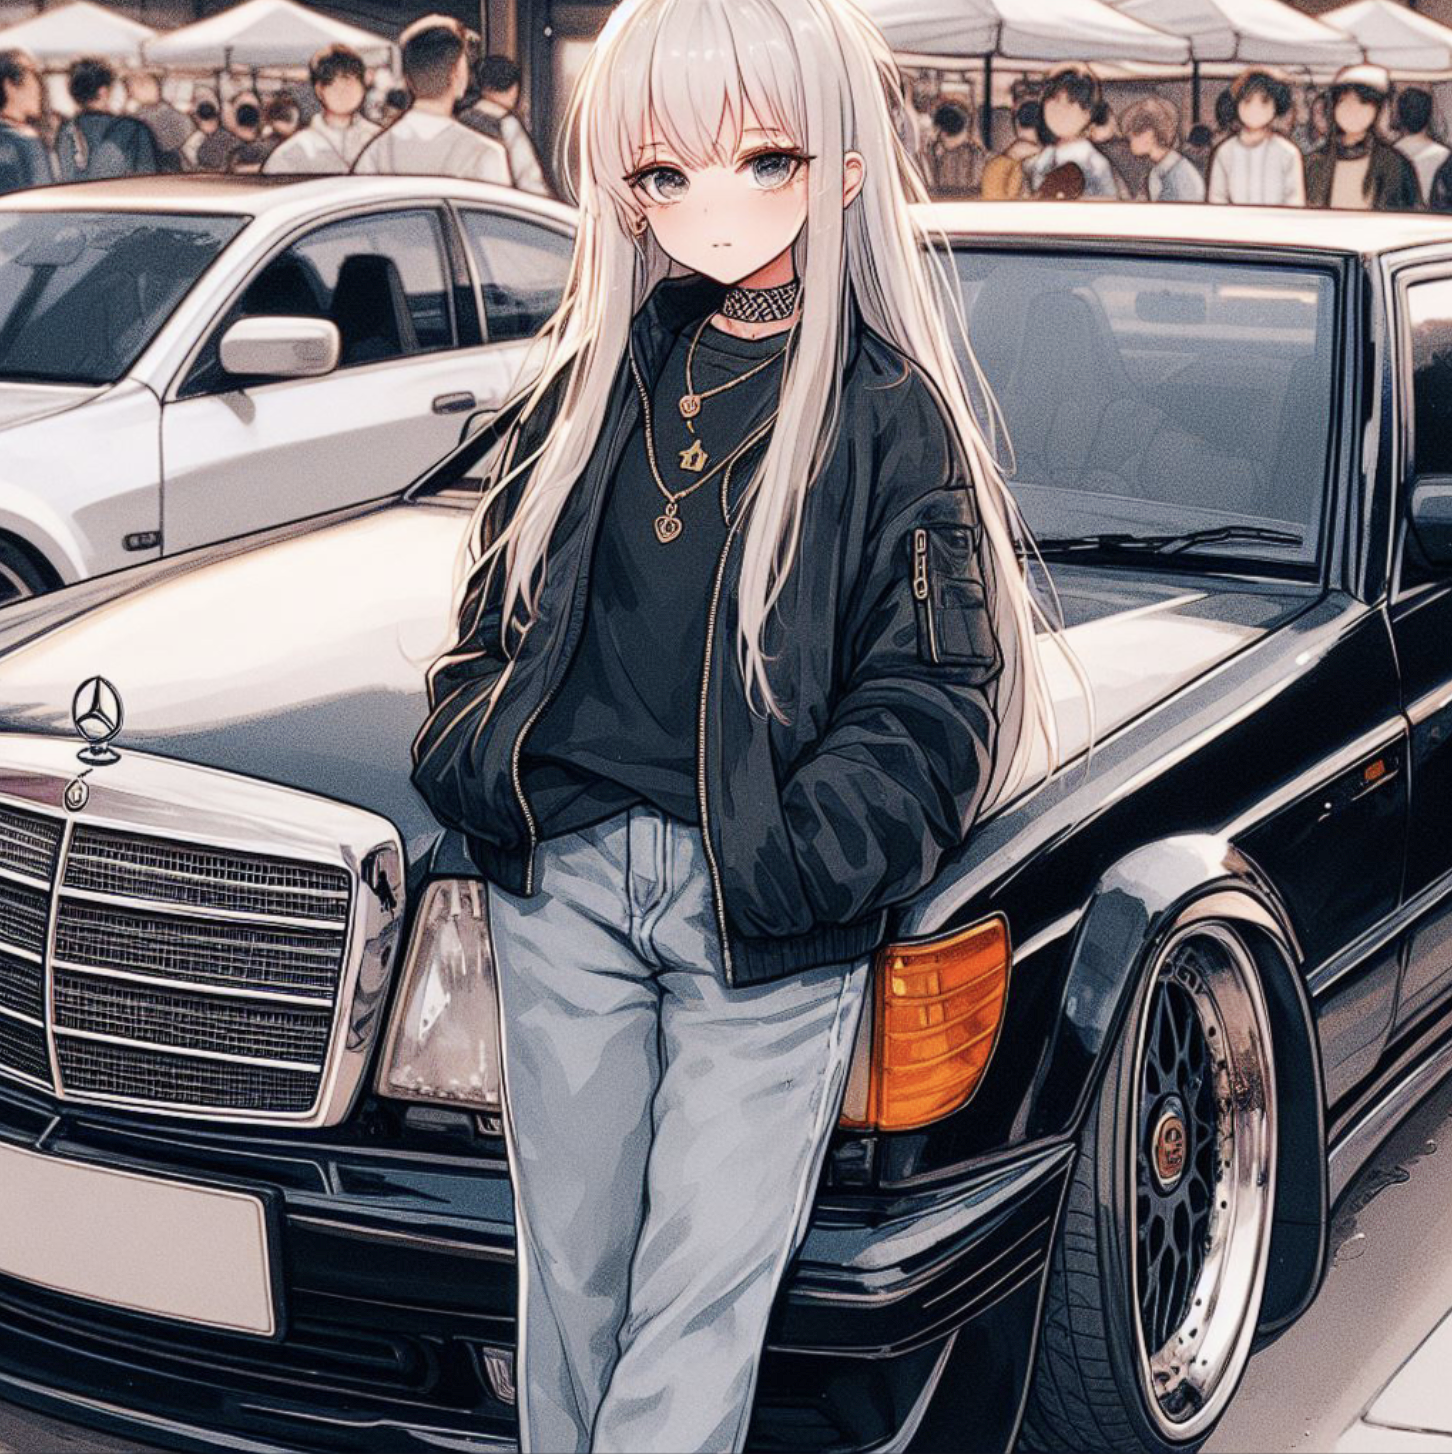 Anime 1452x1454 anime anime girls artwork car vehicle Mercedes-Benz jacket choker necklace car meets digital art AI art